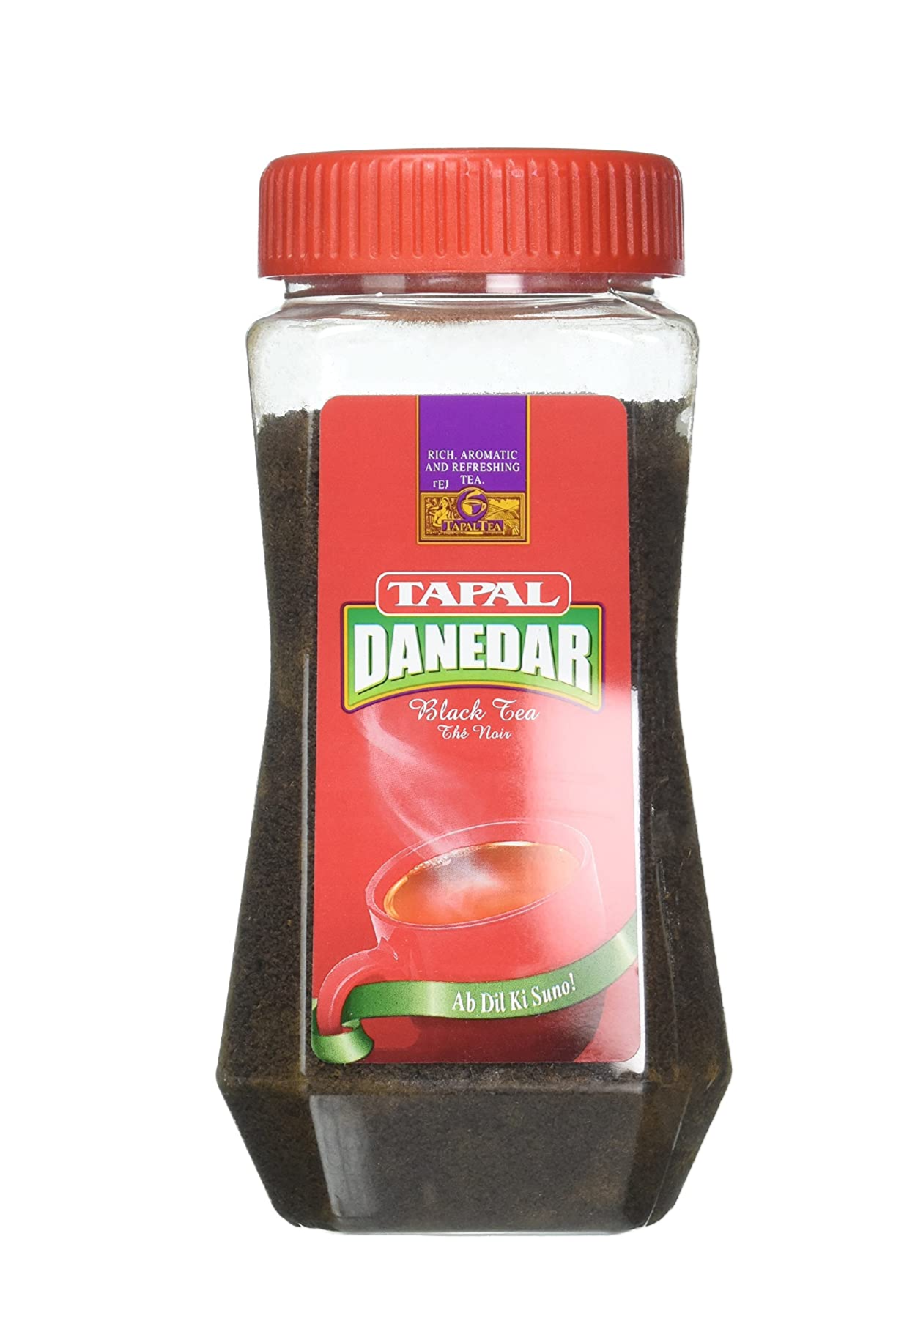 Tapal - Black Tea Danedar, Loose Leaf 450g (Case of 15)